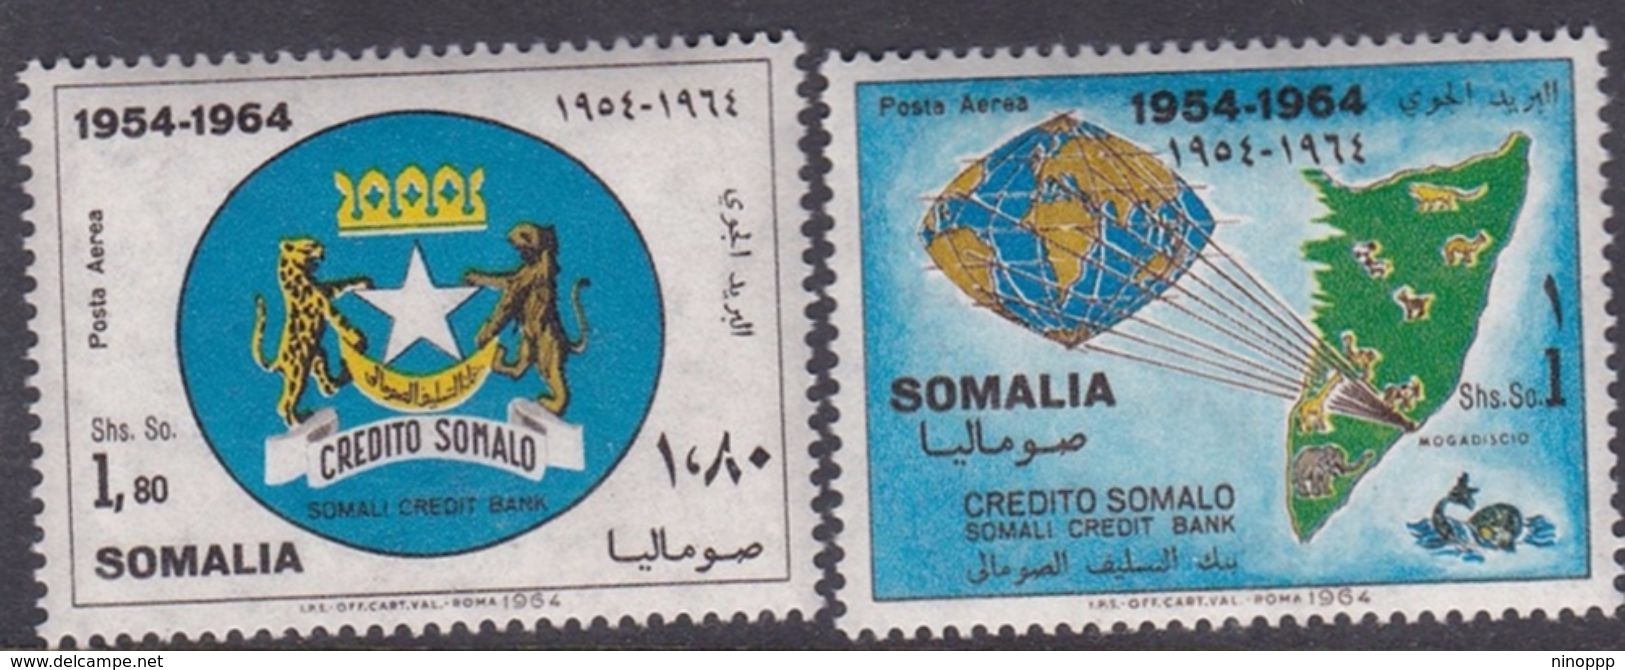 Somalia Scott C93-94 1964 10th Anniversary Of The Somali Credit Bank, Mint Never Hinged - Somalie (AFIS)